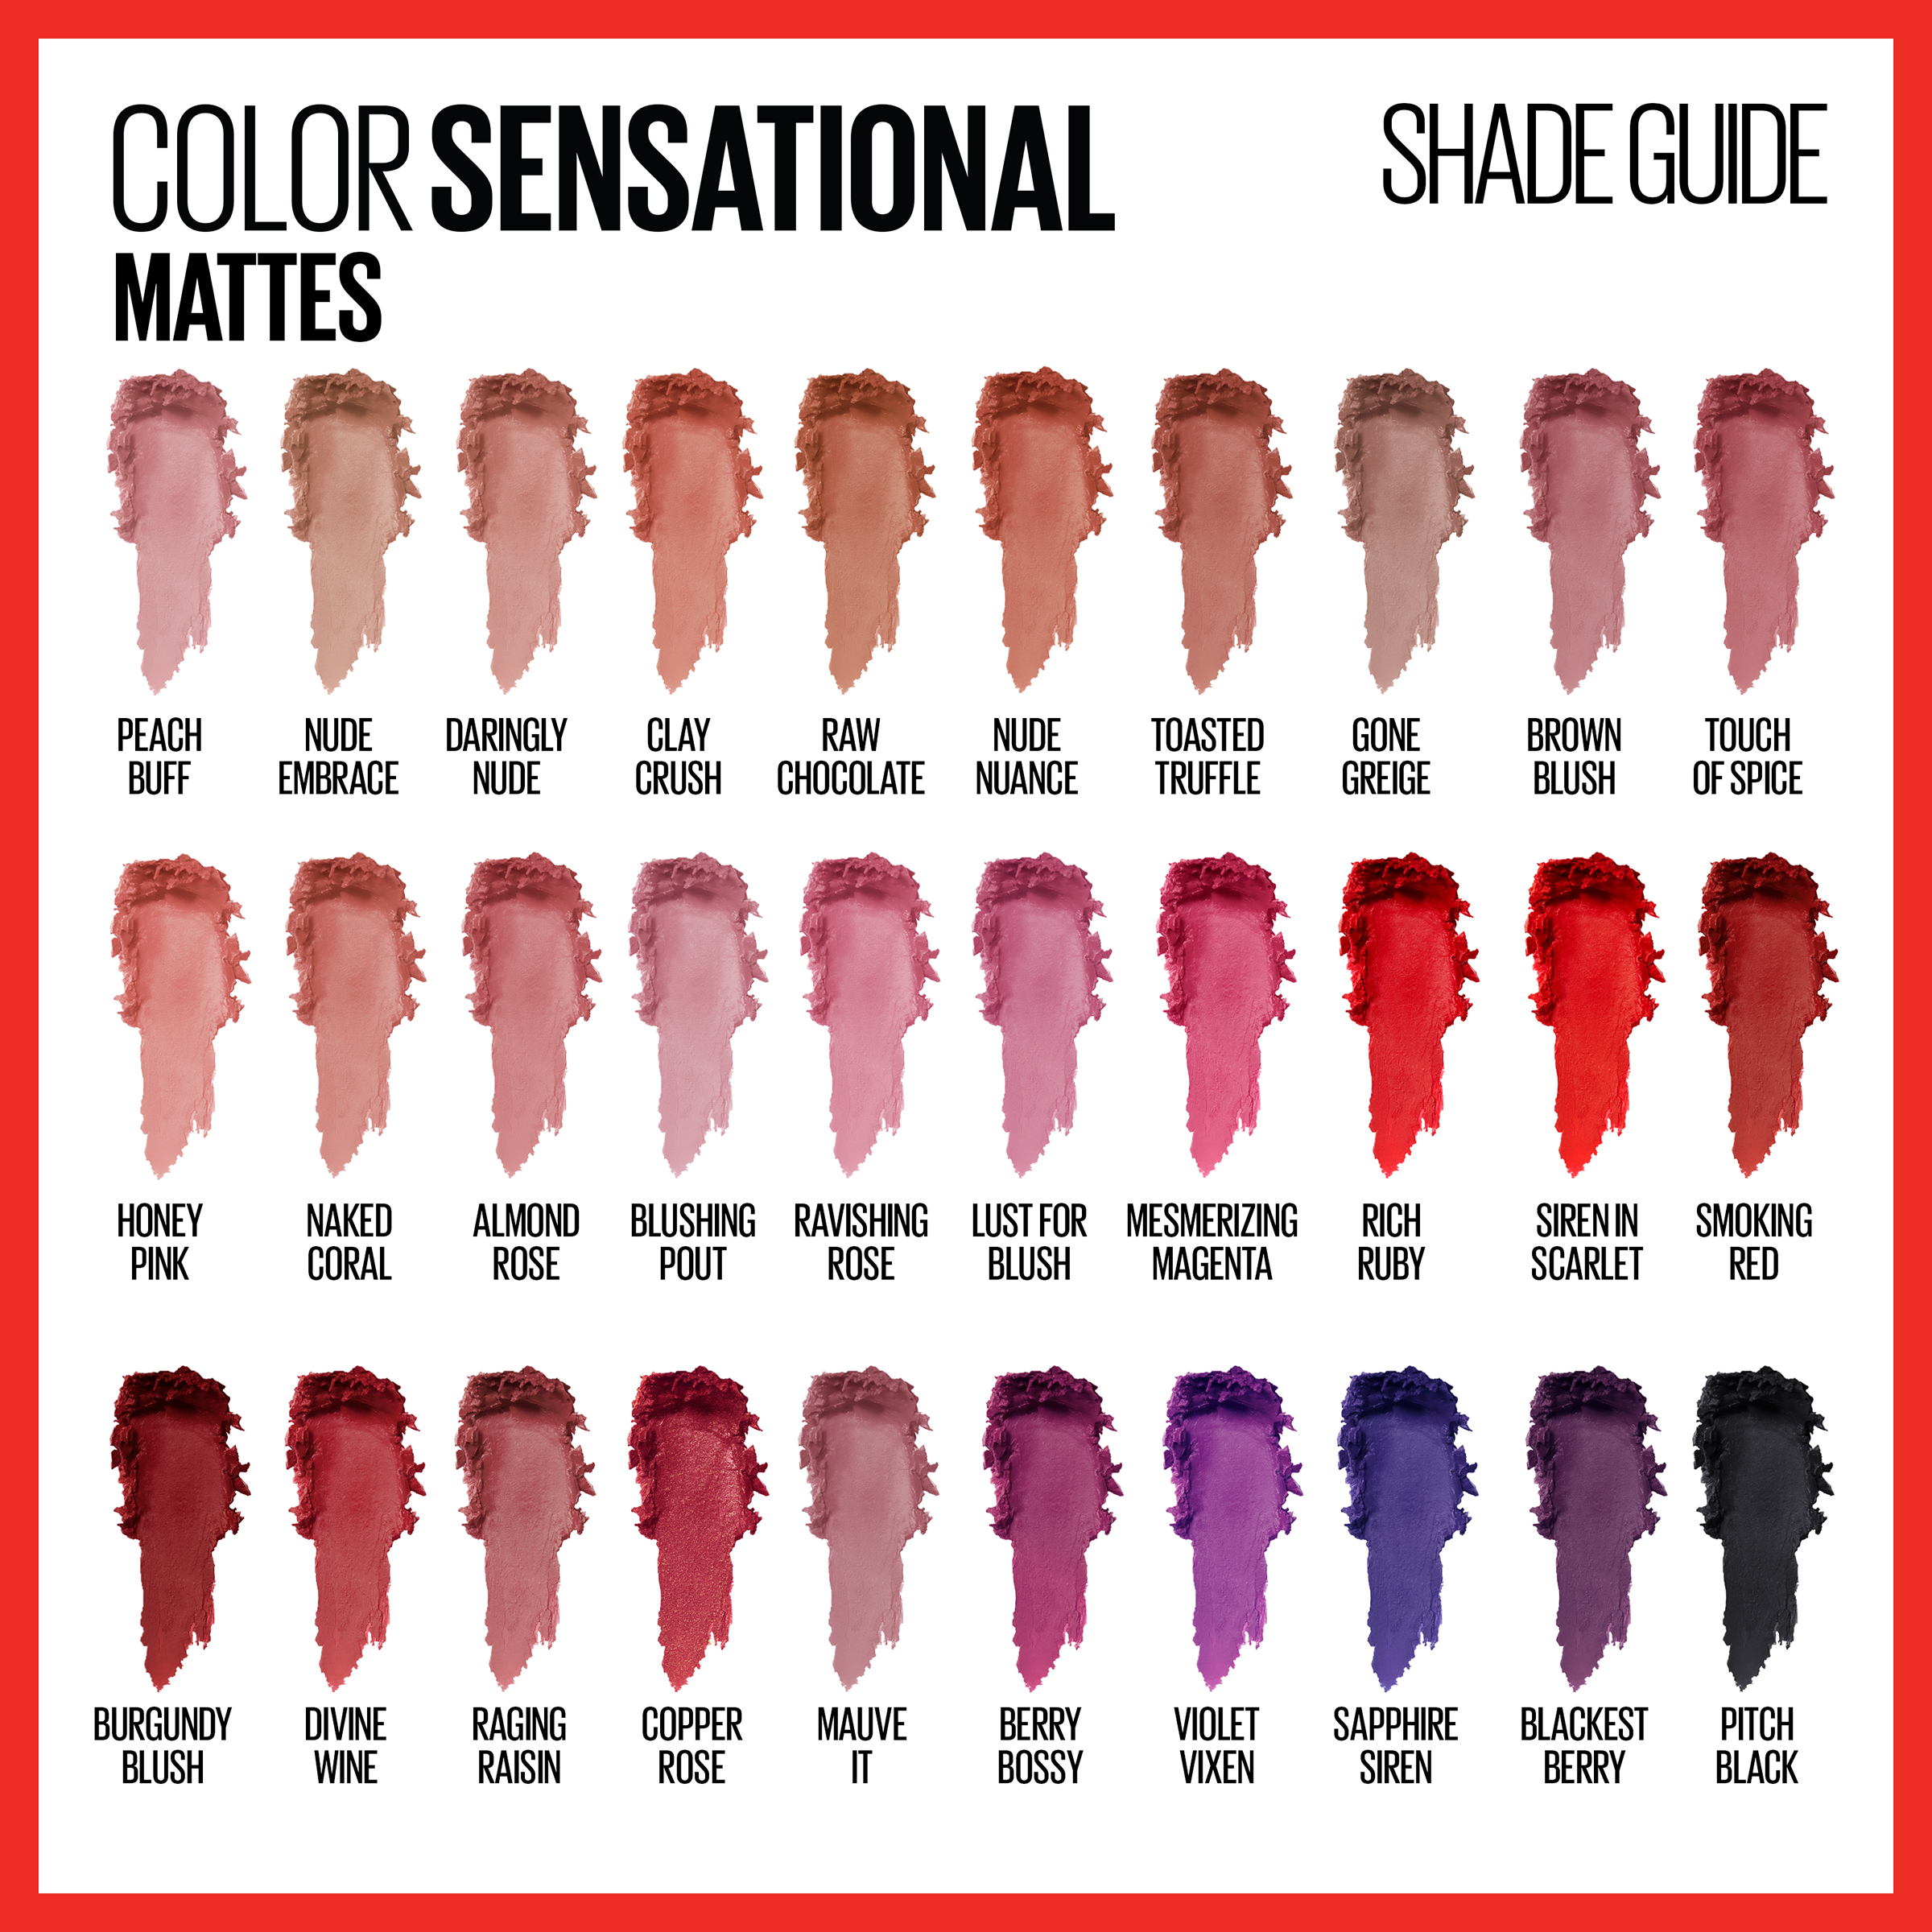 Maybelline Color Sensational Matte Finish Lipstick, Siren In Scarlet - image 3 of 4